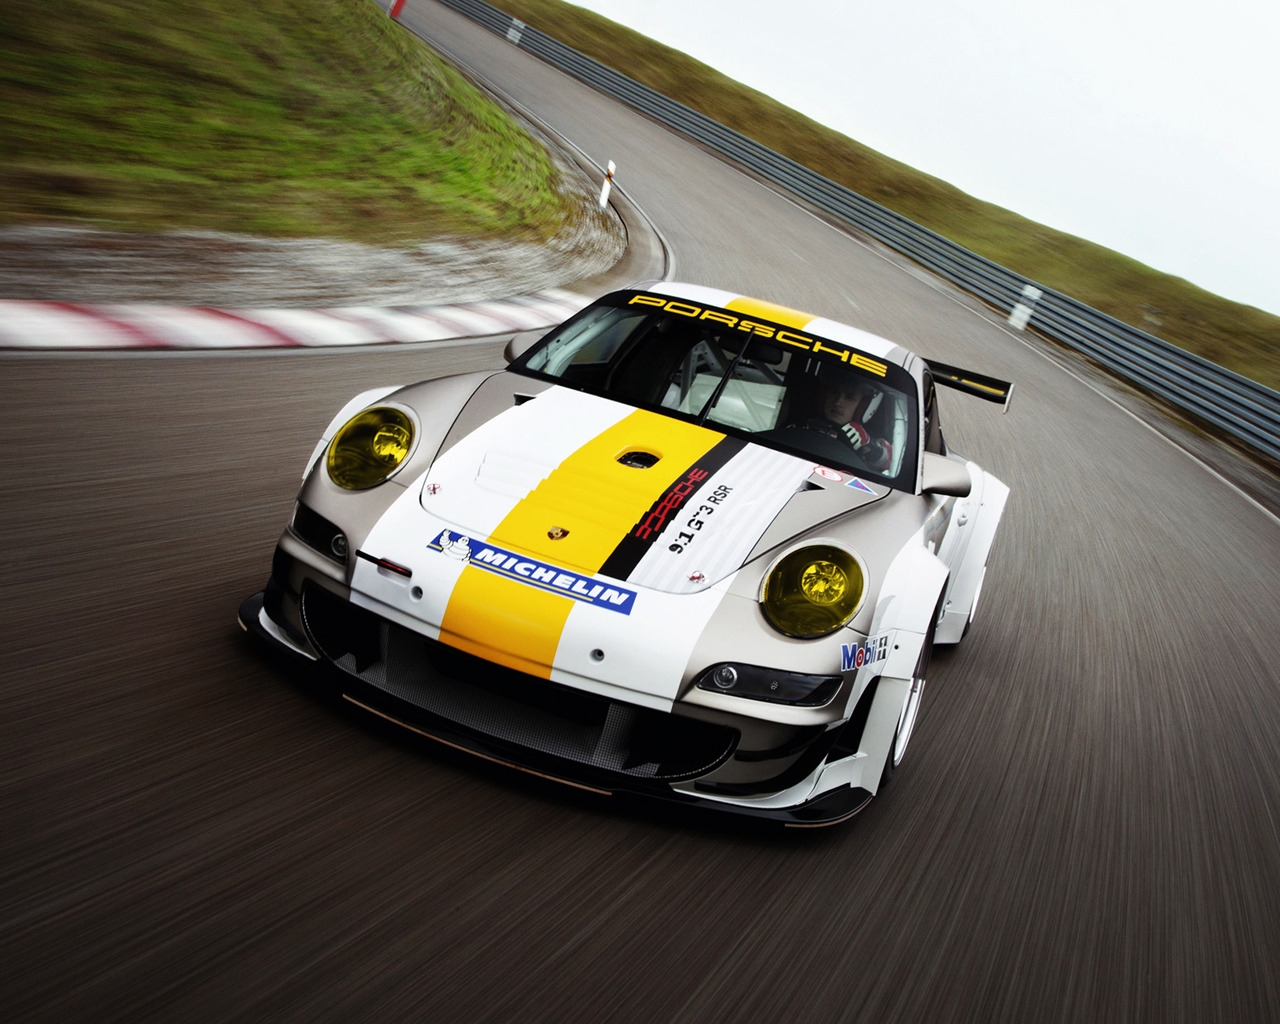 Porsche 911 GT3 RSR for 1280 x 1024 resolution